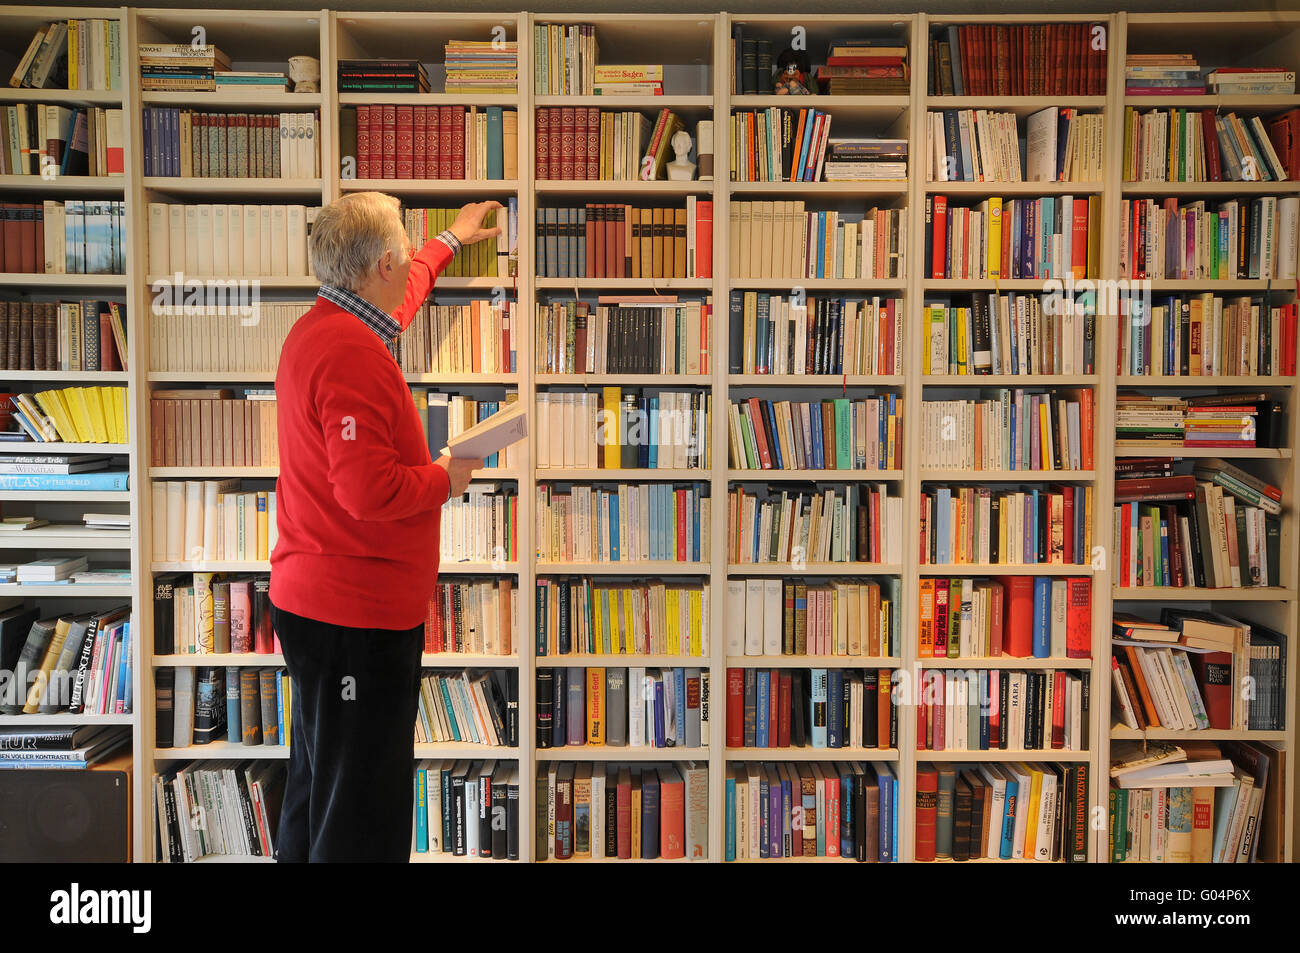 Shelf with books Stock Photo